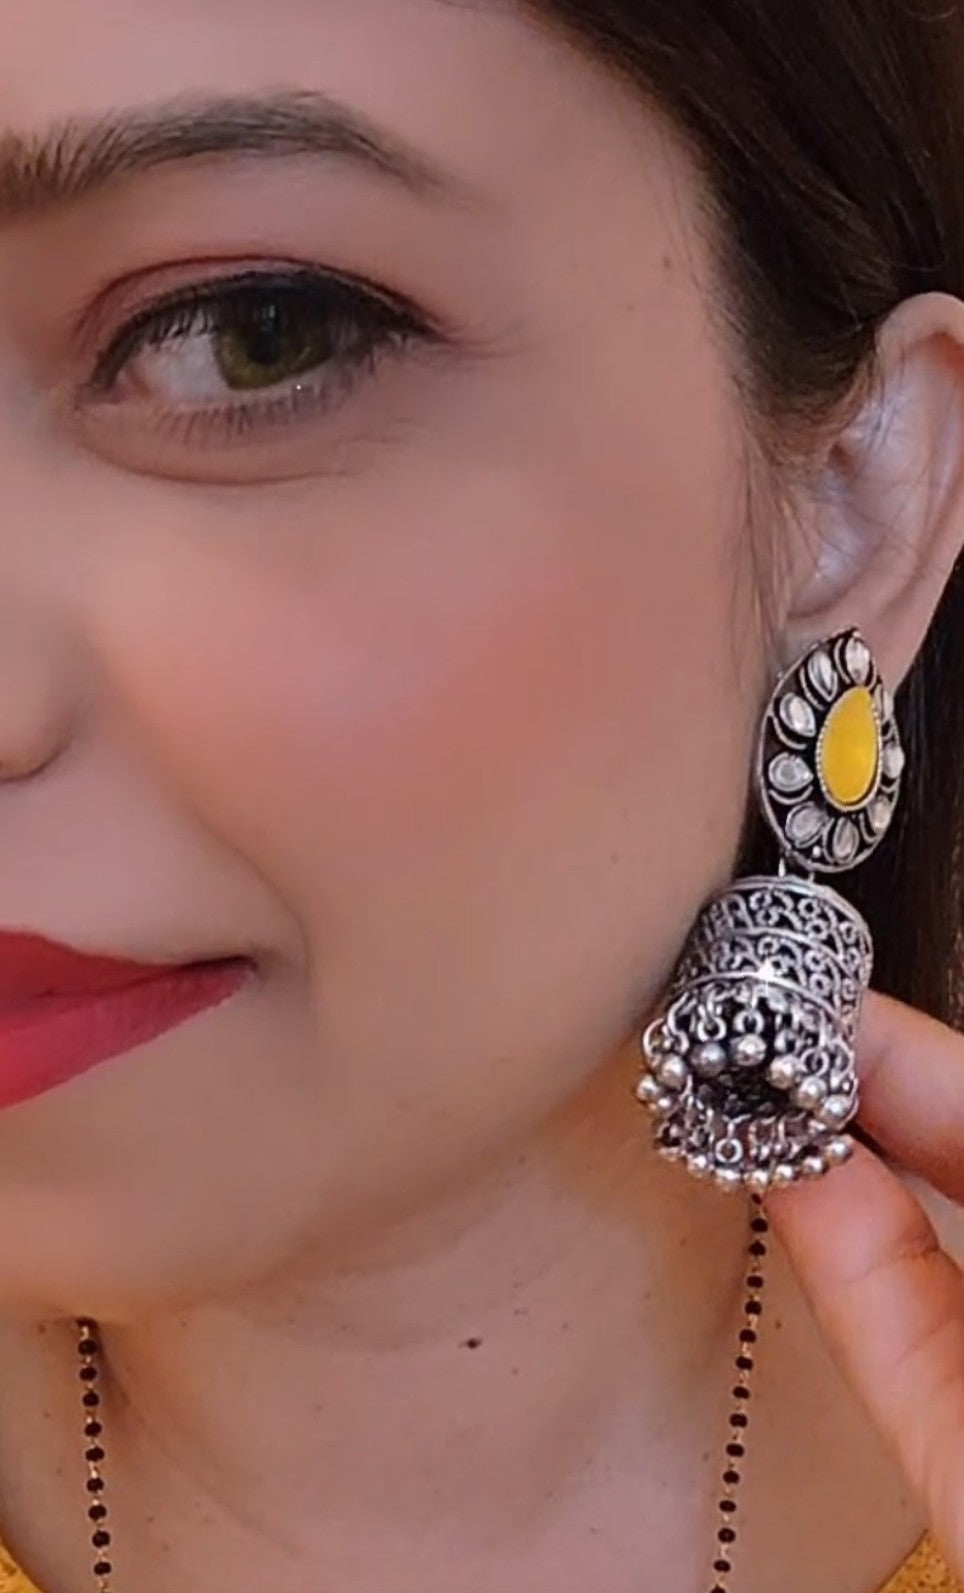 Miara Oxidise Earrings Jhumka